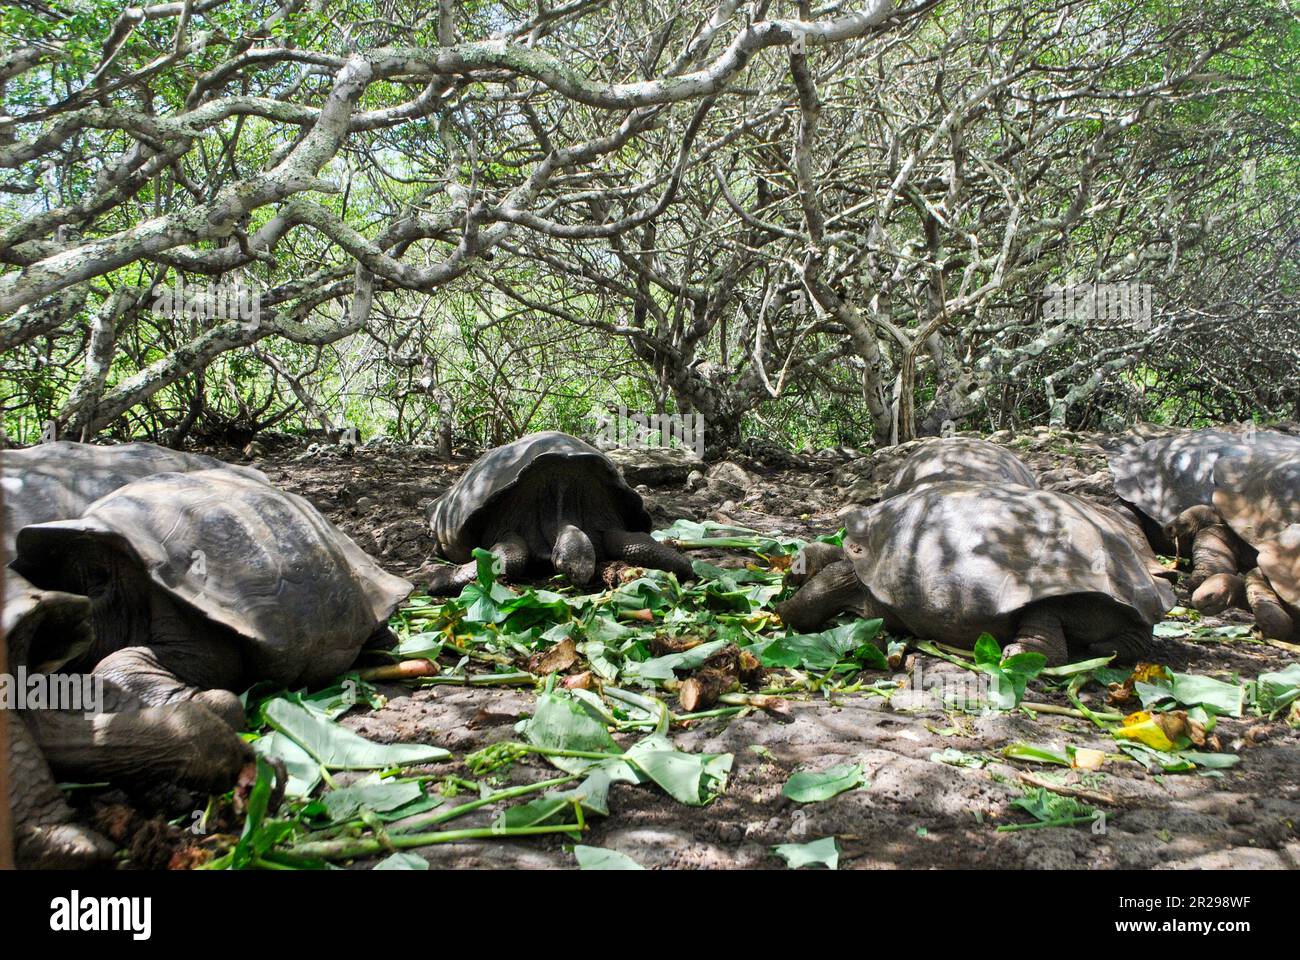 A group of Galapagos giant tortoises, chelonoidis spp., eating.  In back, manzanillo fruits, poison apple.  San Cristobal Island.  Galapagos Islands, Stock Photo